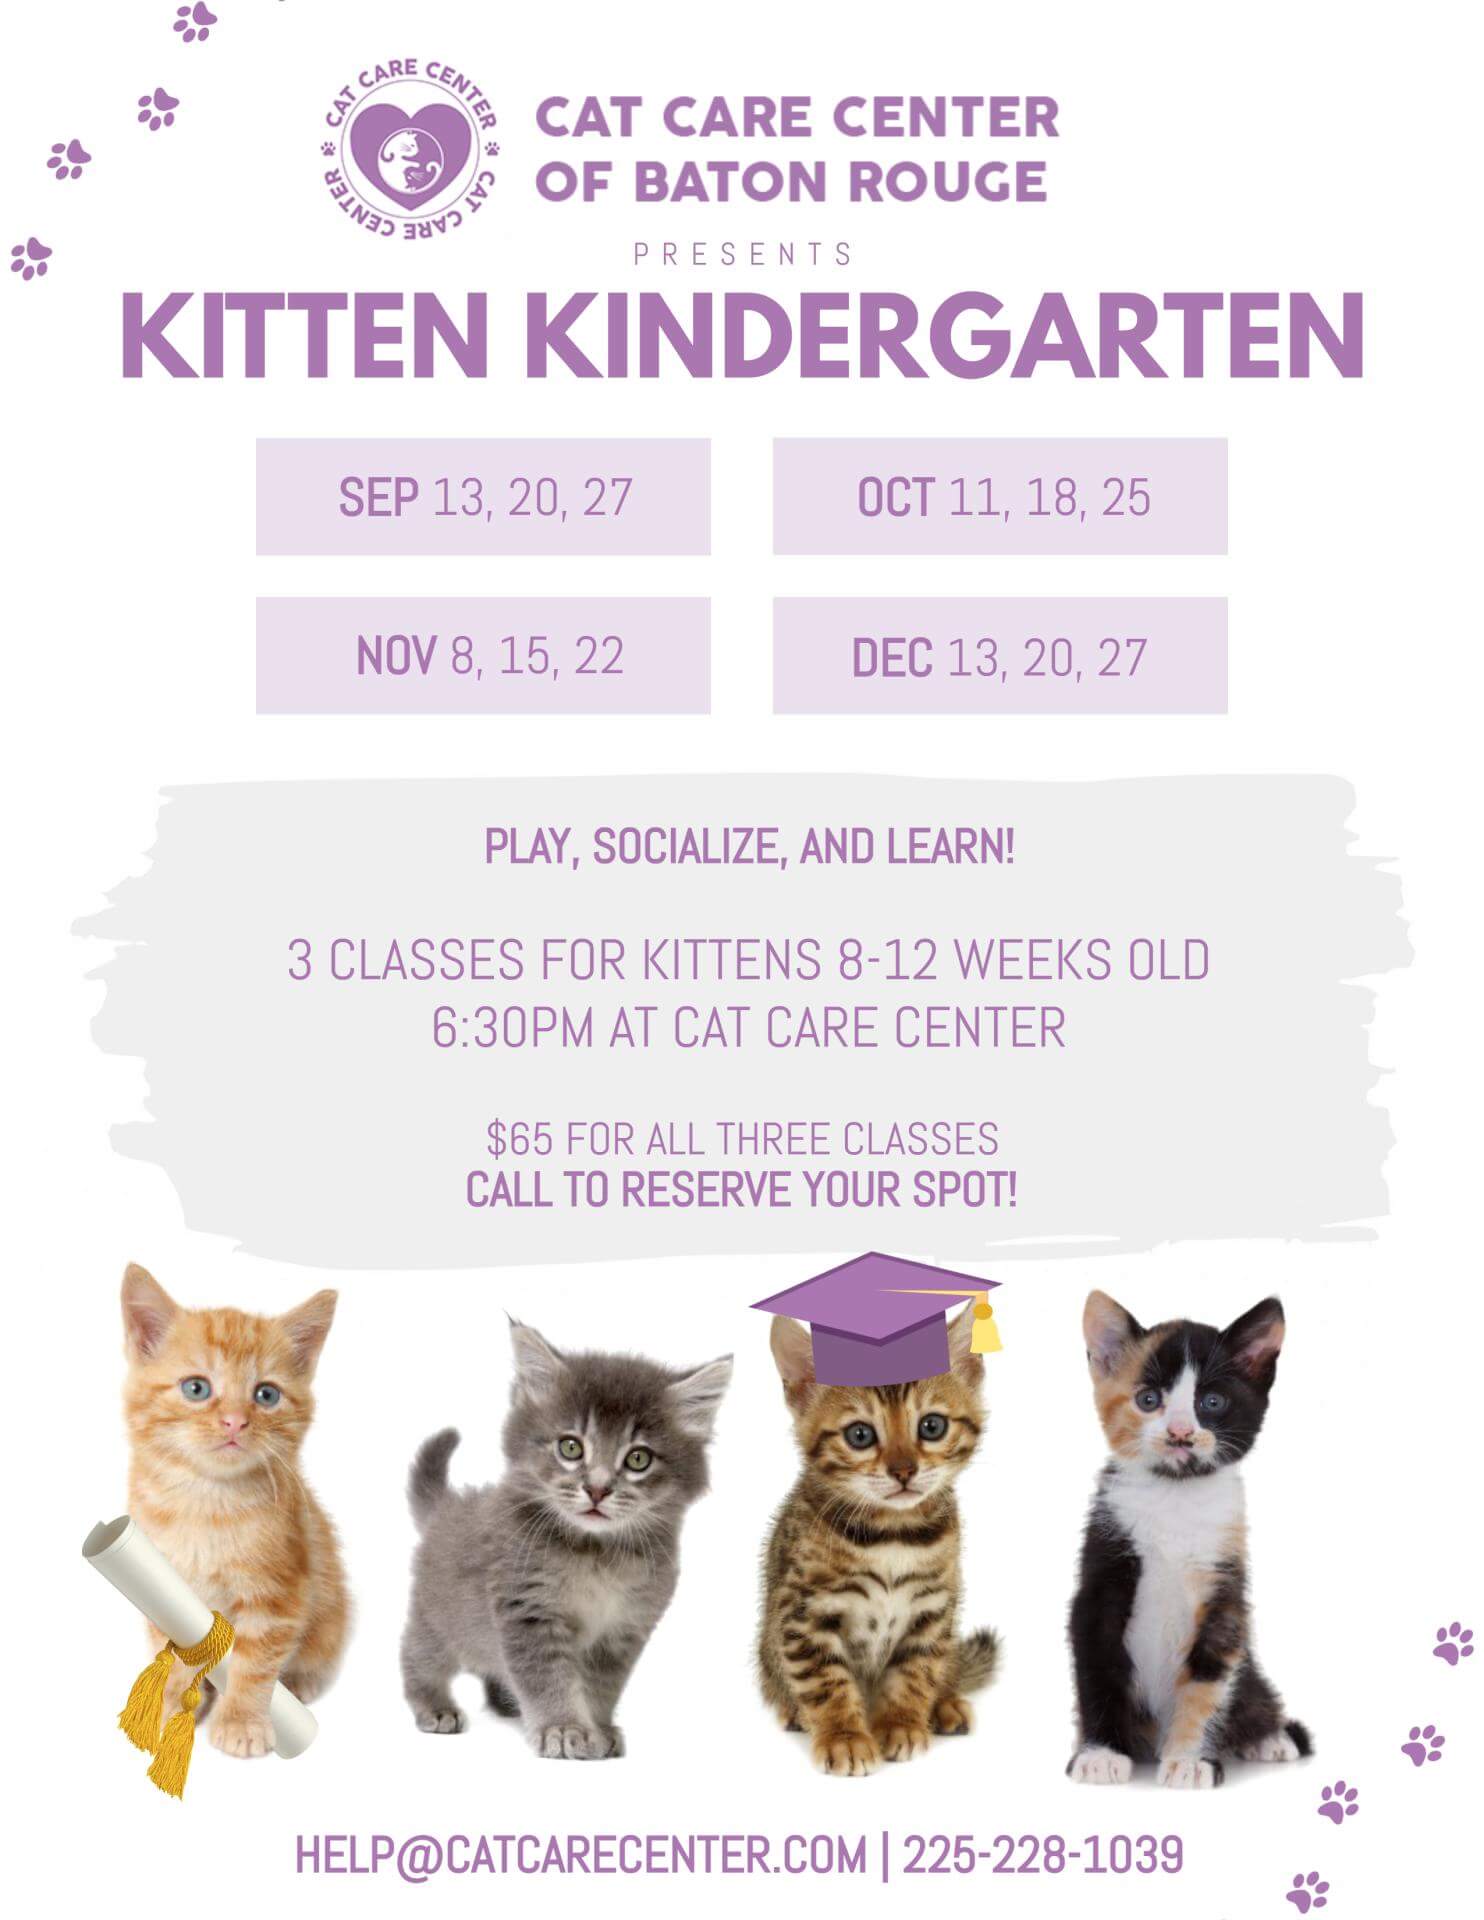 Kitten Kindergarten Baton Rouge Event at Cat Care Center